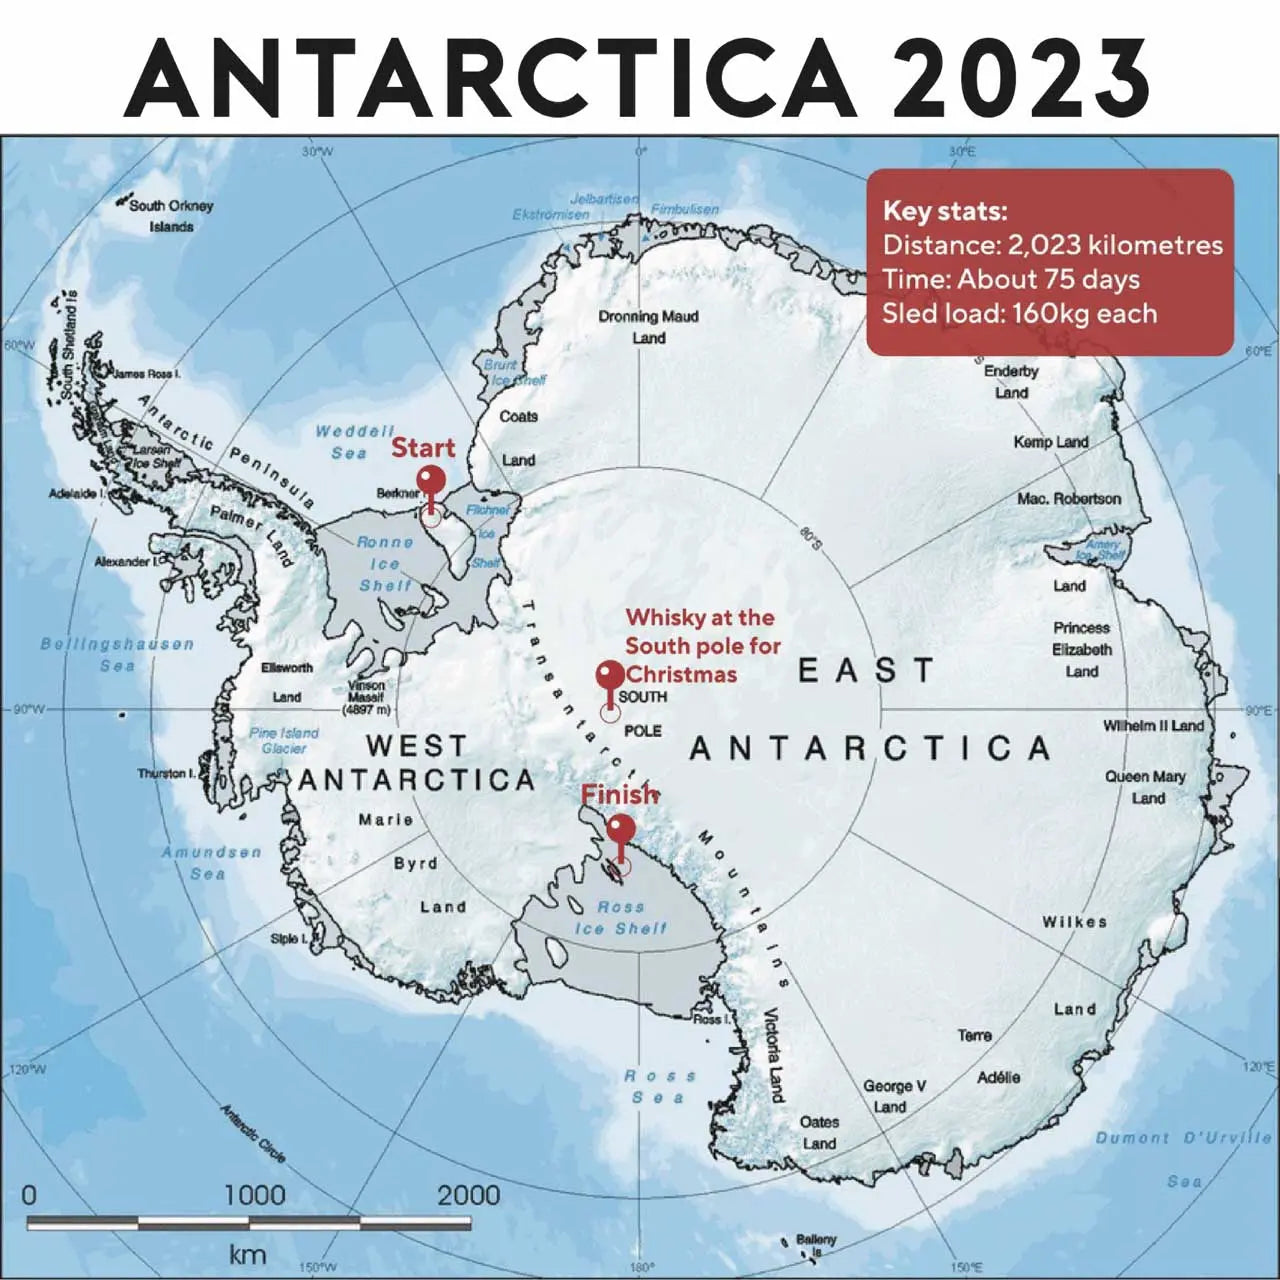 Antarctica 2023 - A 2,023km journey for the planet. Roam